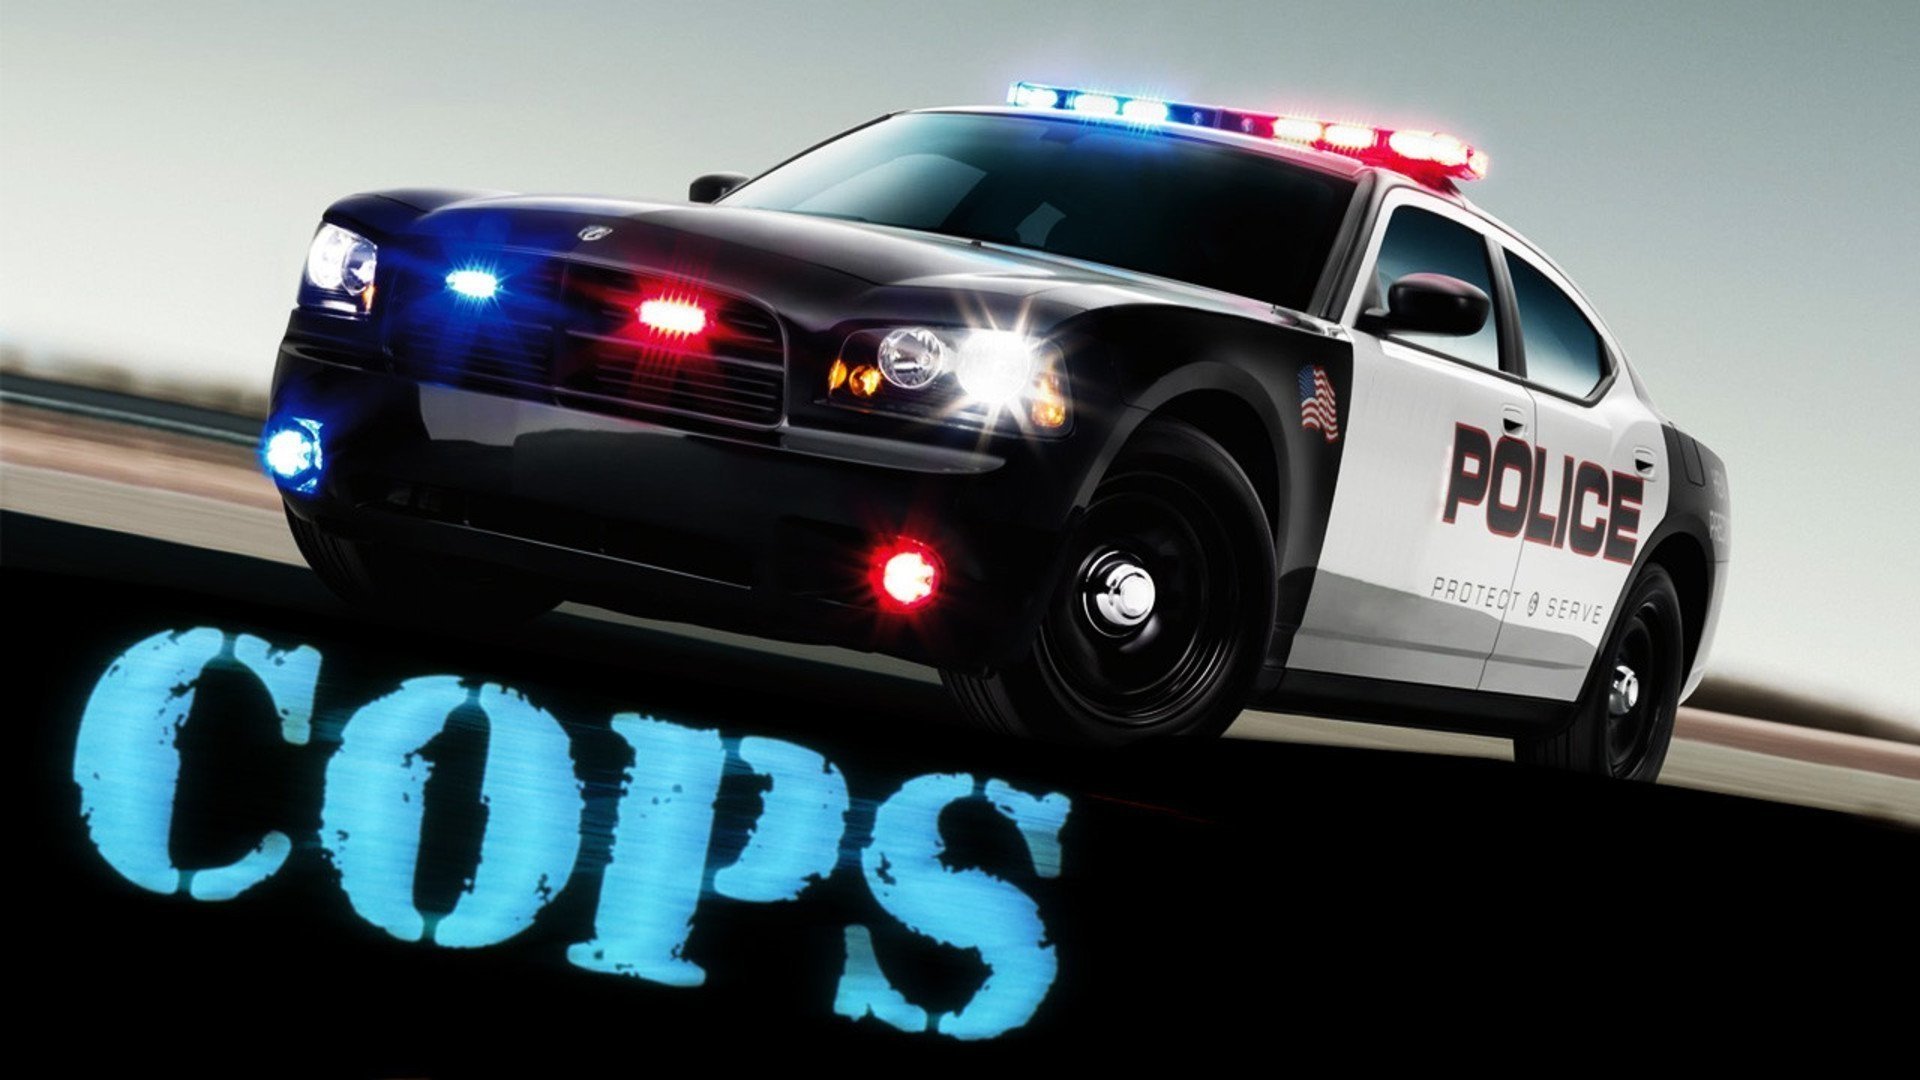 Cops HD Wallpaper Background Image Id